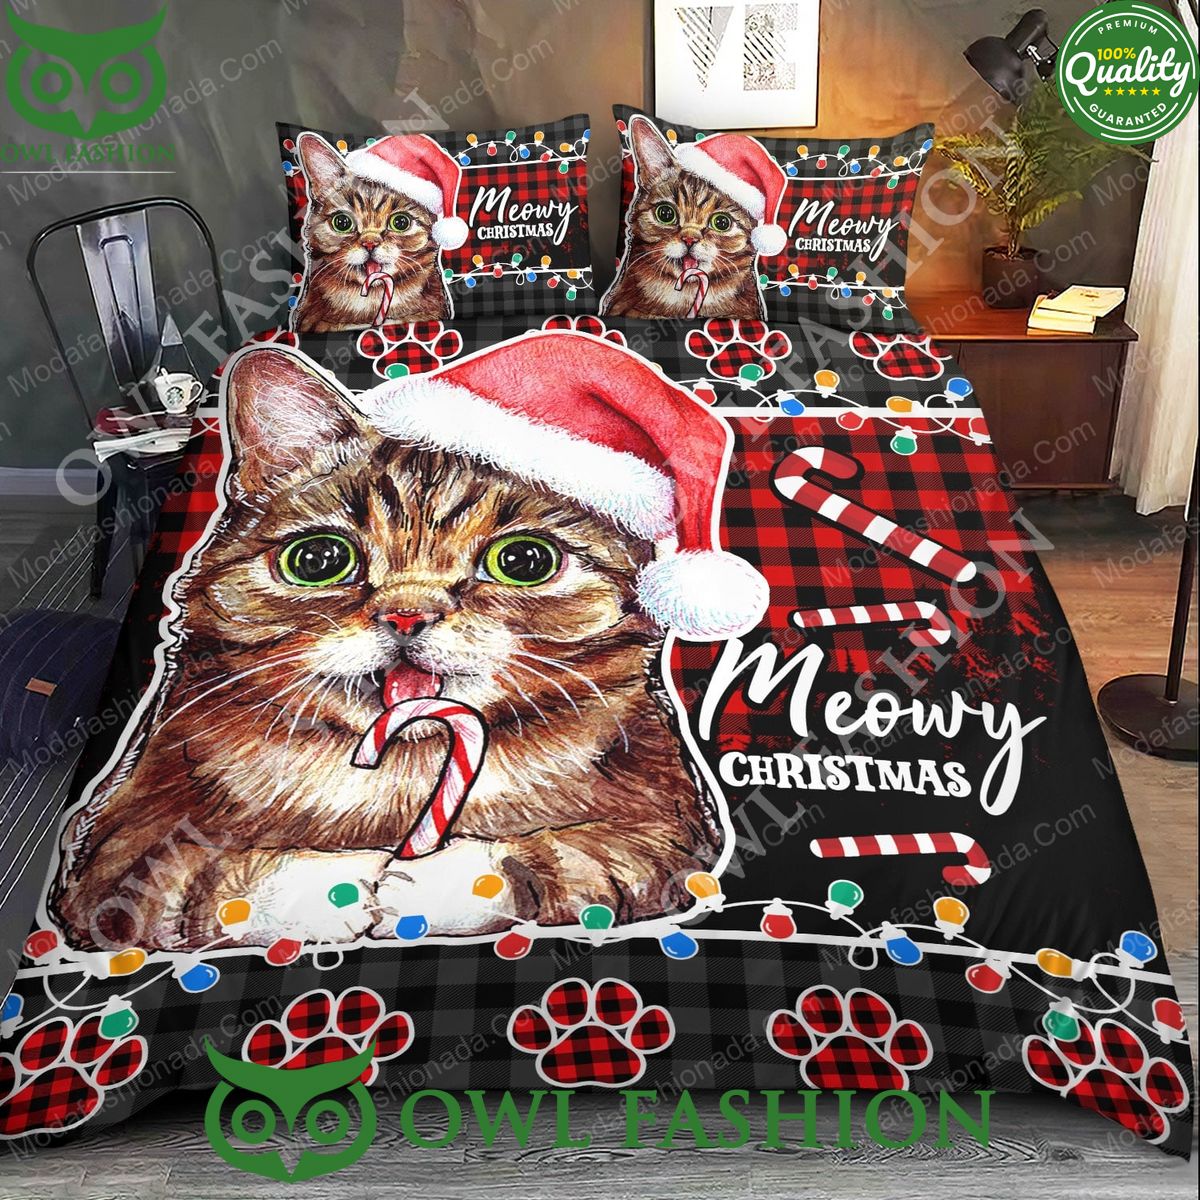 lil bub cat santa christmas limited bedding set 2 2spRK.jpg